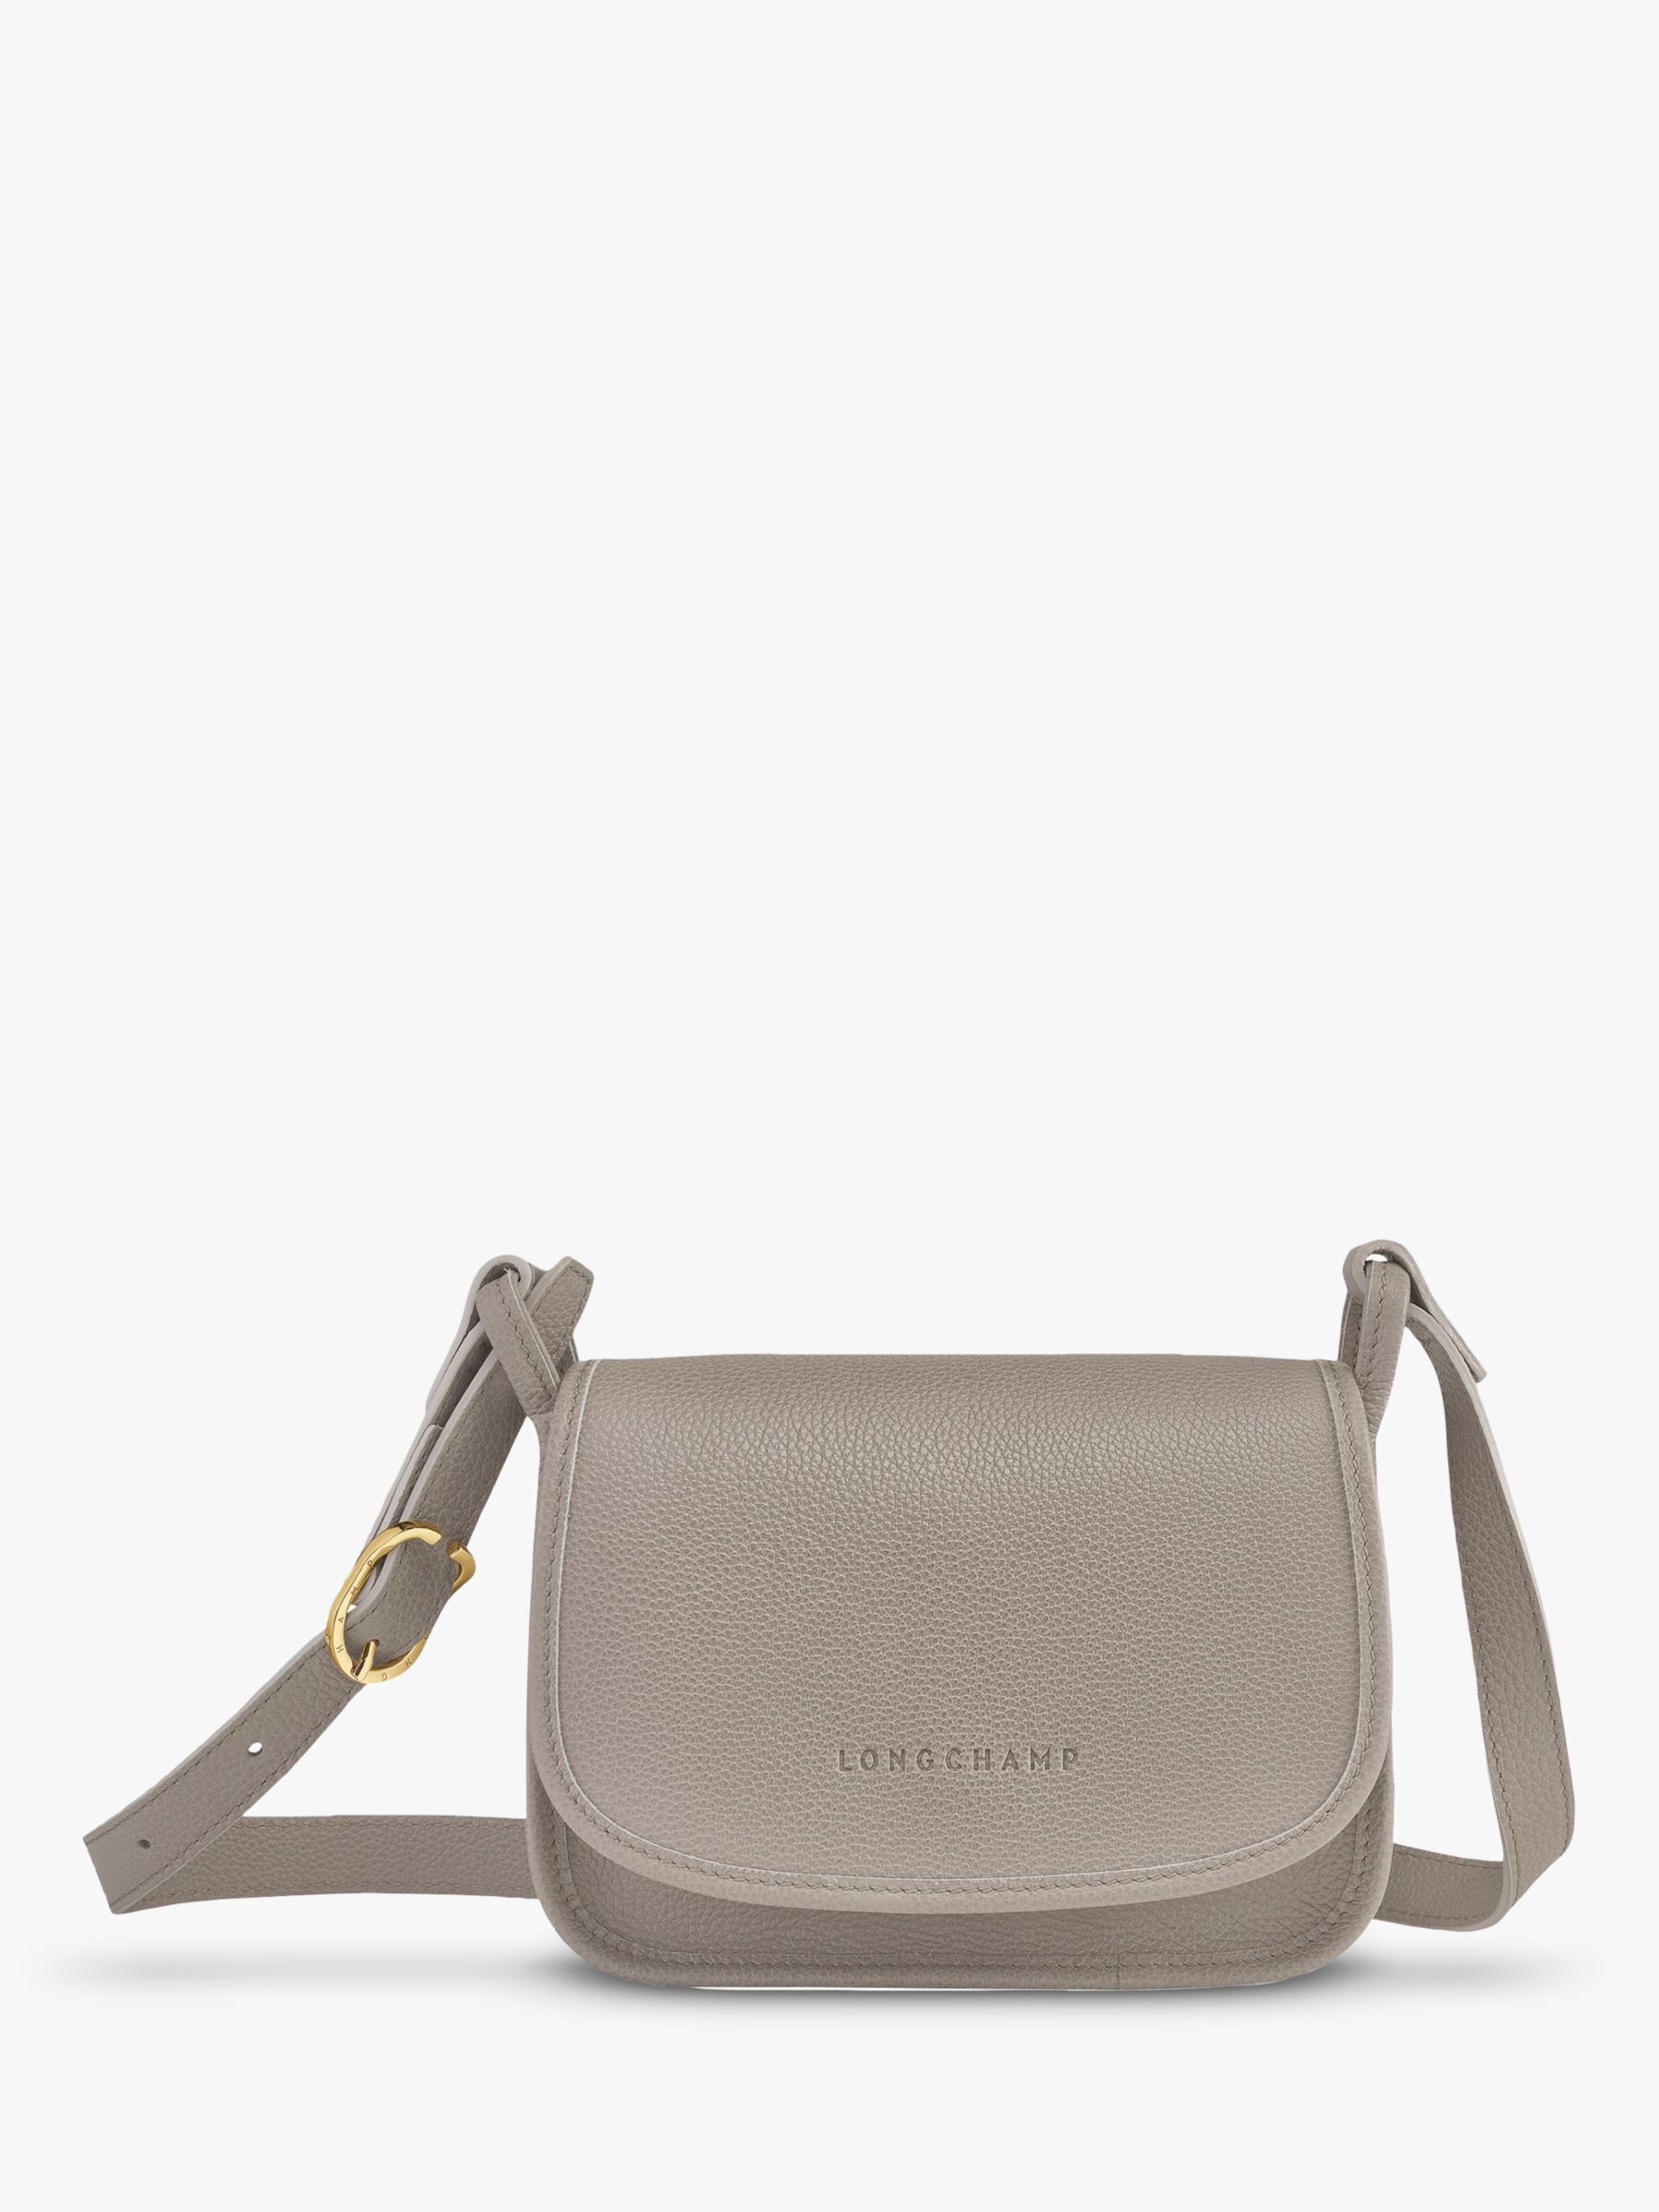 Longchamp Le FoulonnÃƒÂ© Small Leather Flap Over Cross Body Bag